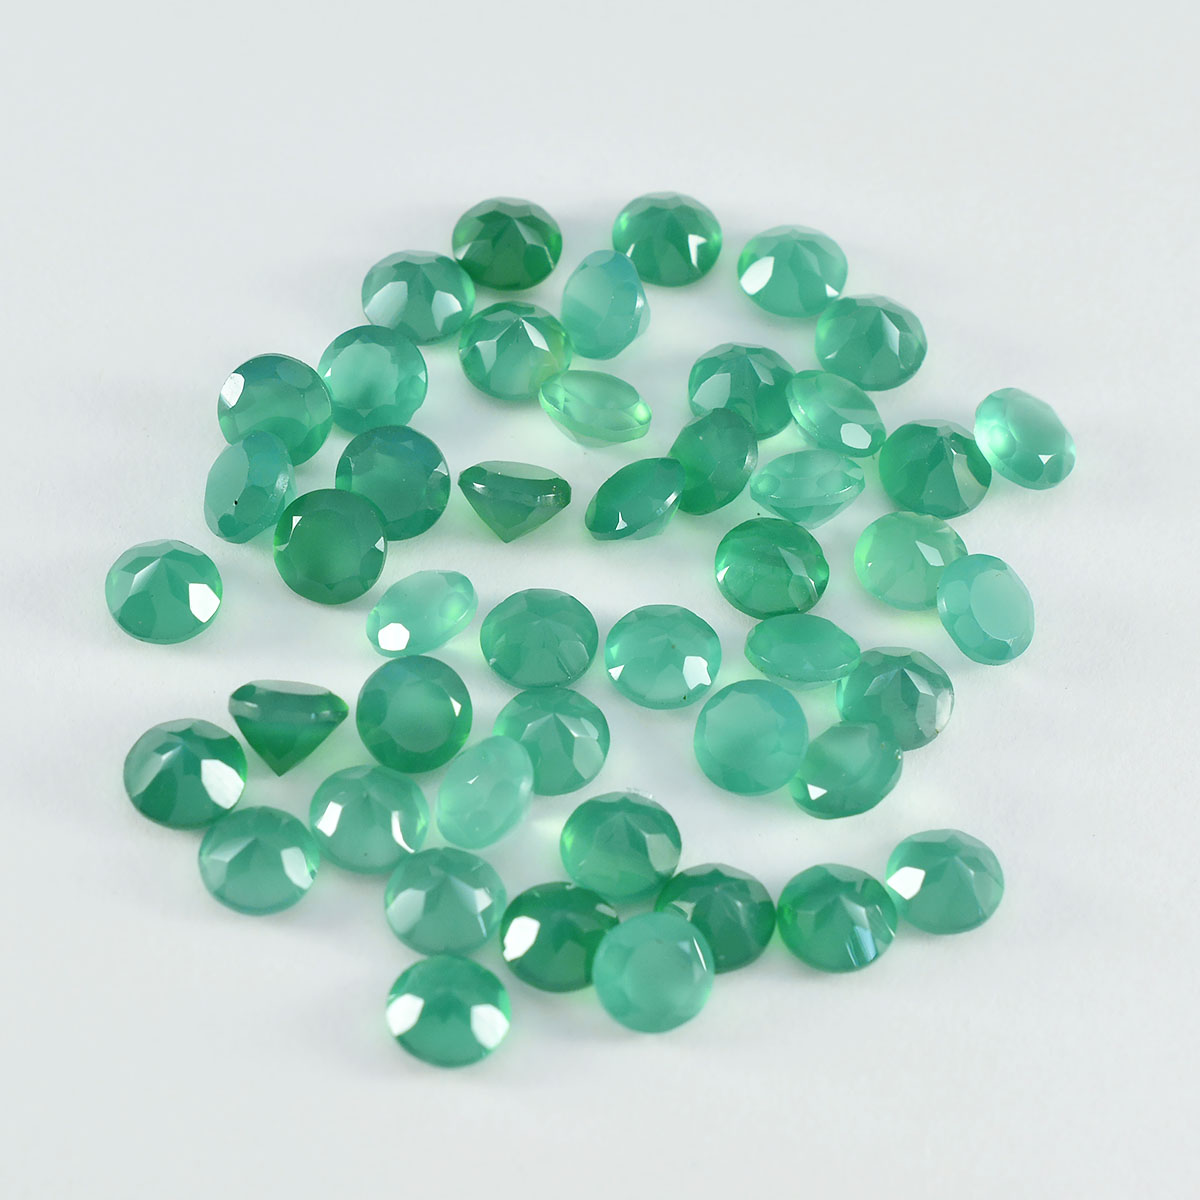 riyogems 1шт натуральный зеленый оникс граненый 3х3 мм круглая форма + качество сыпучий камень